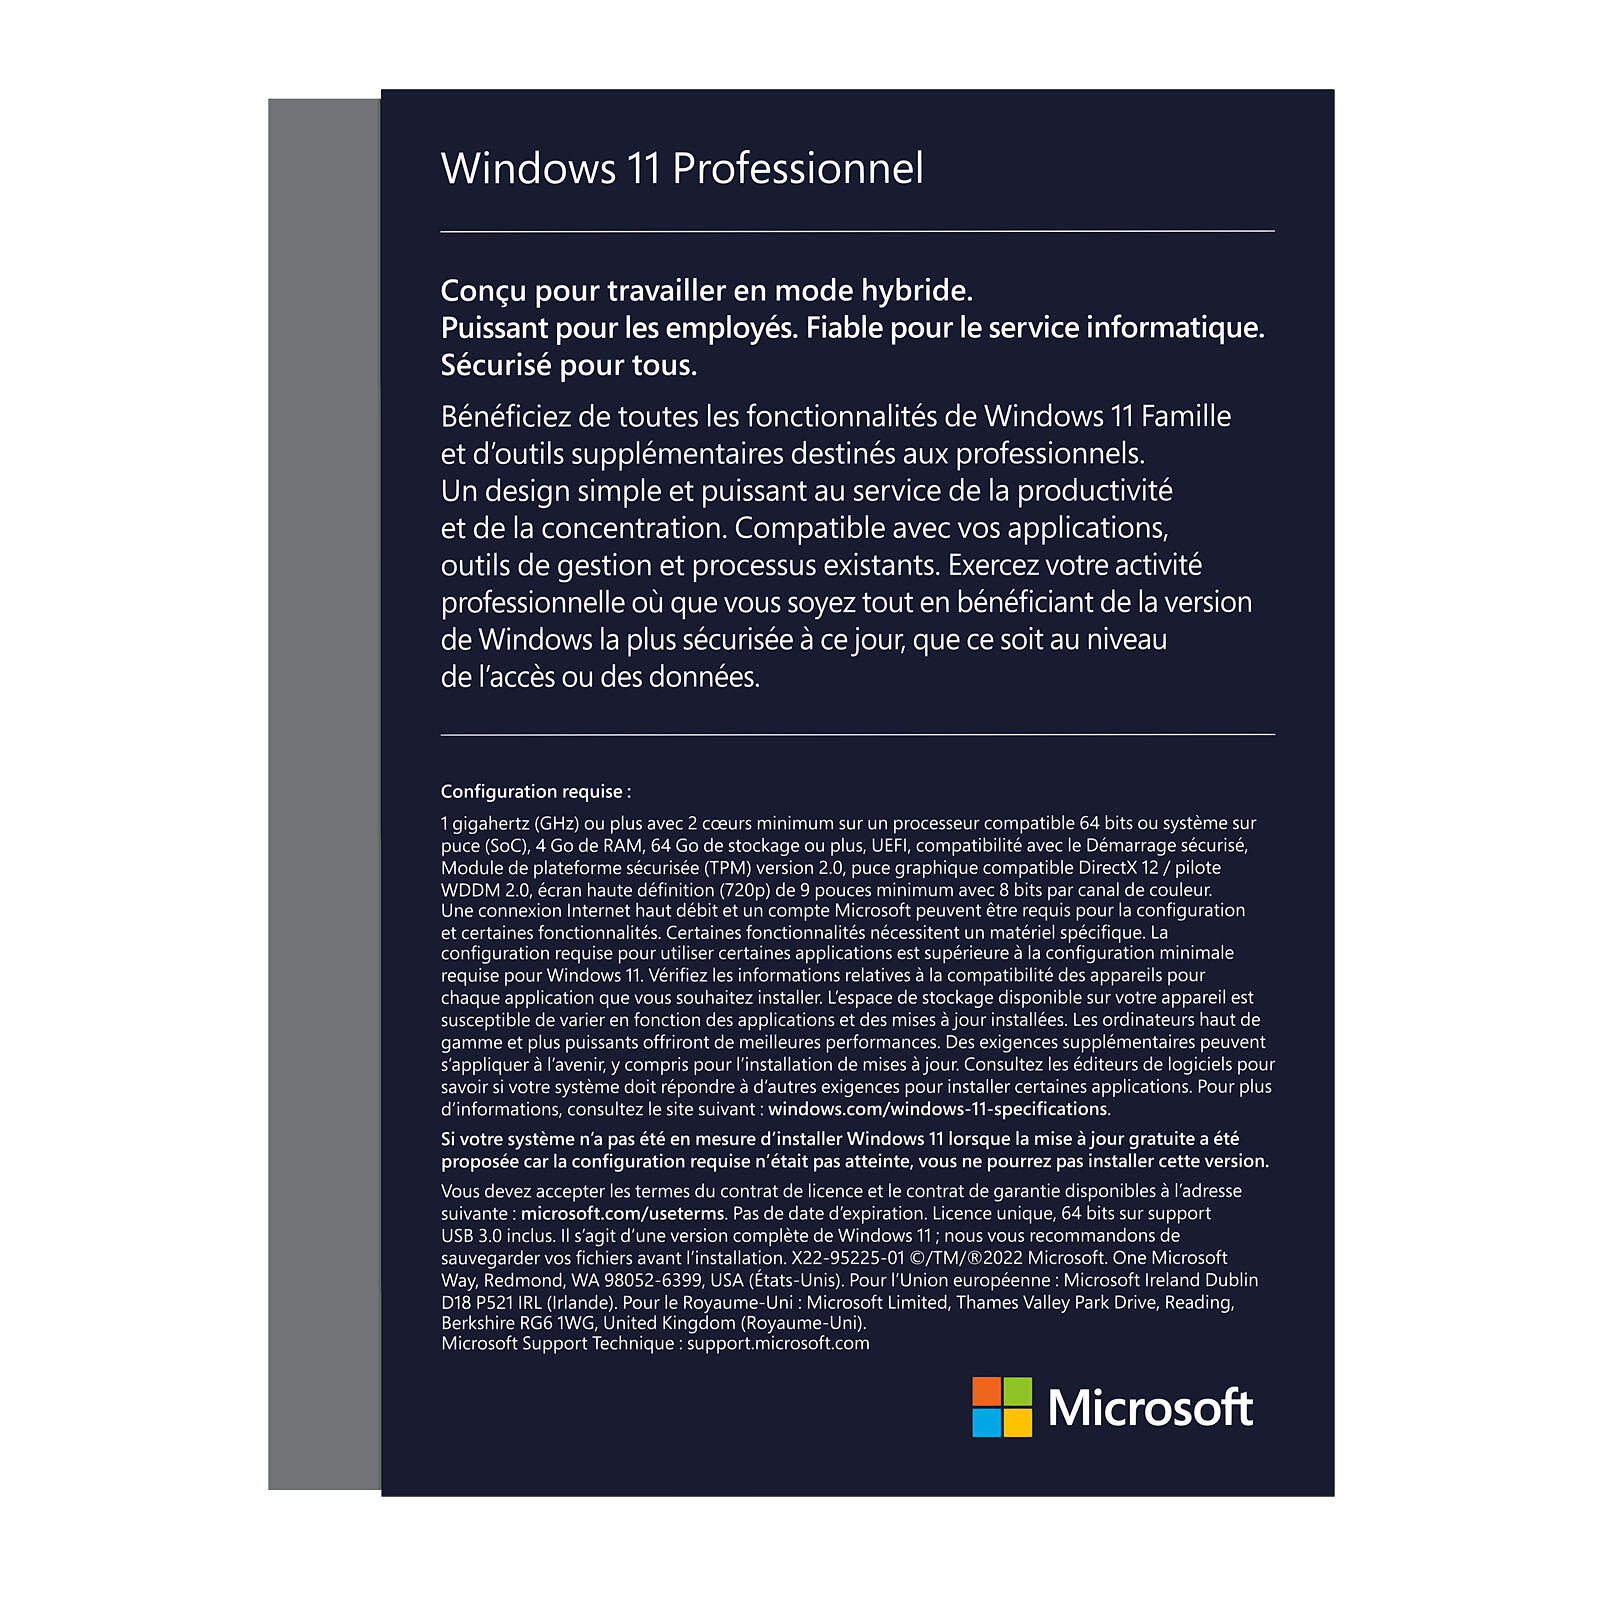 Microsoft Windows 11 Professionnel 64 bits (clé USB) - Windows